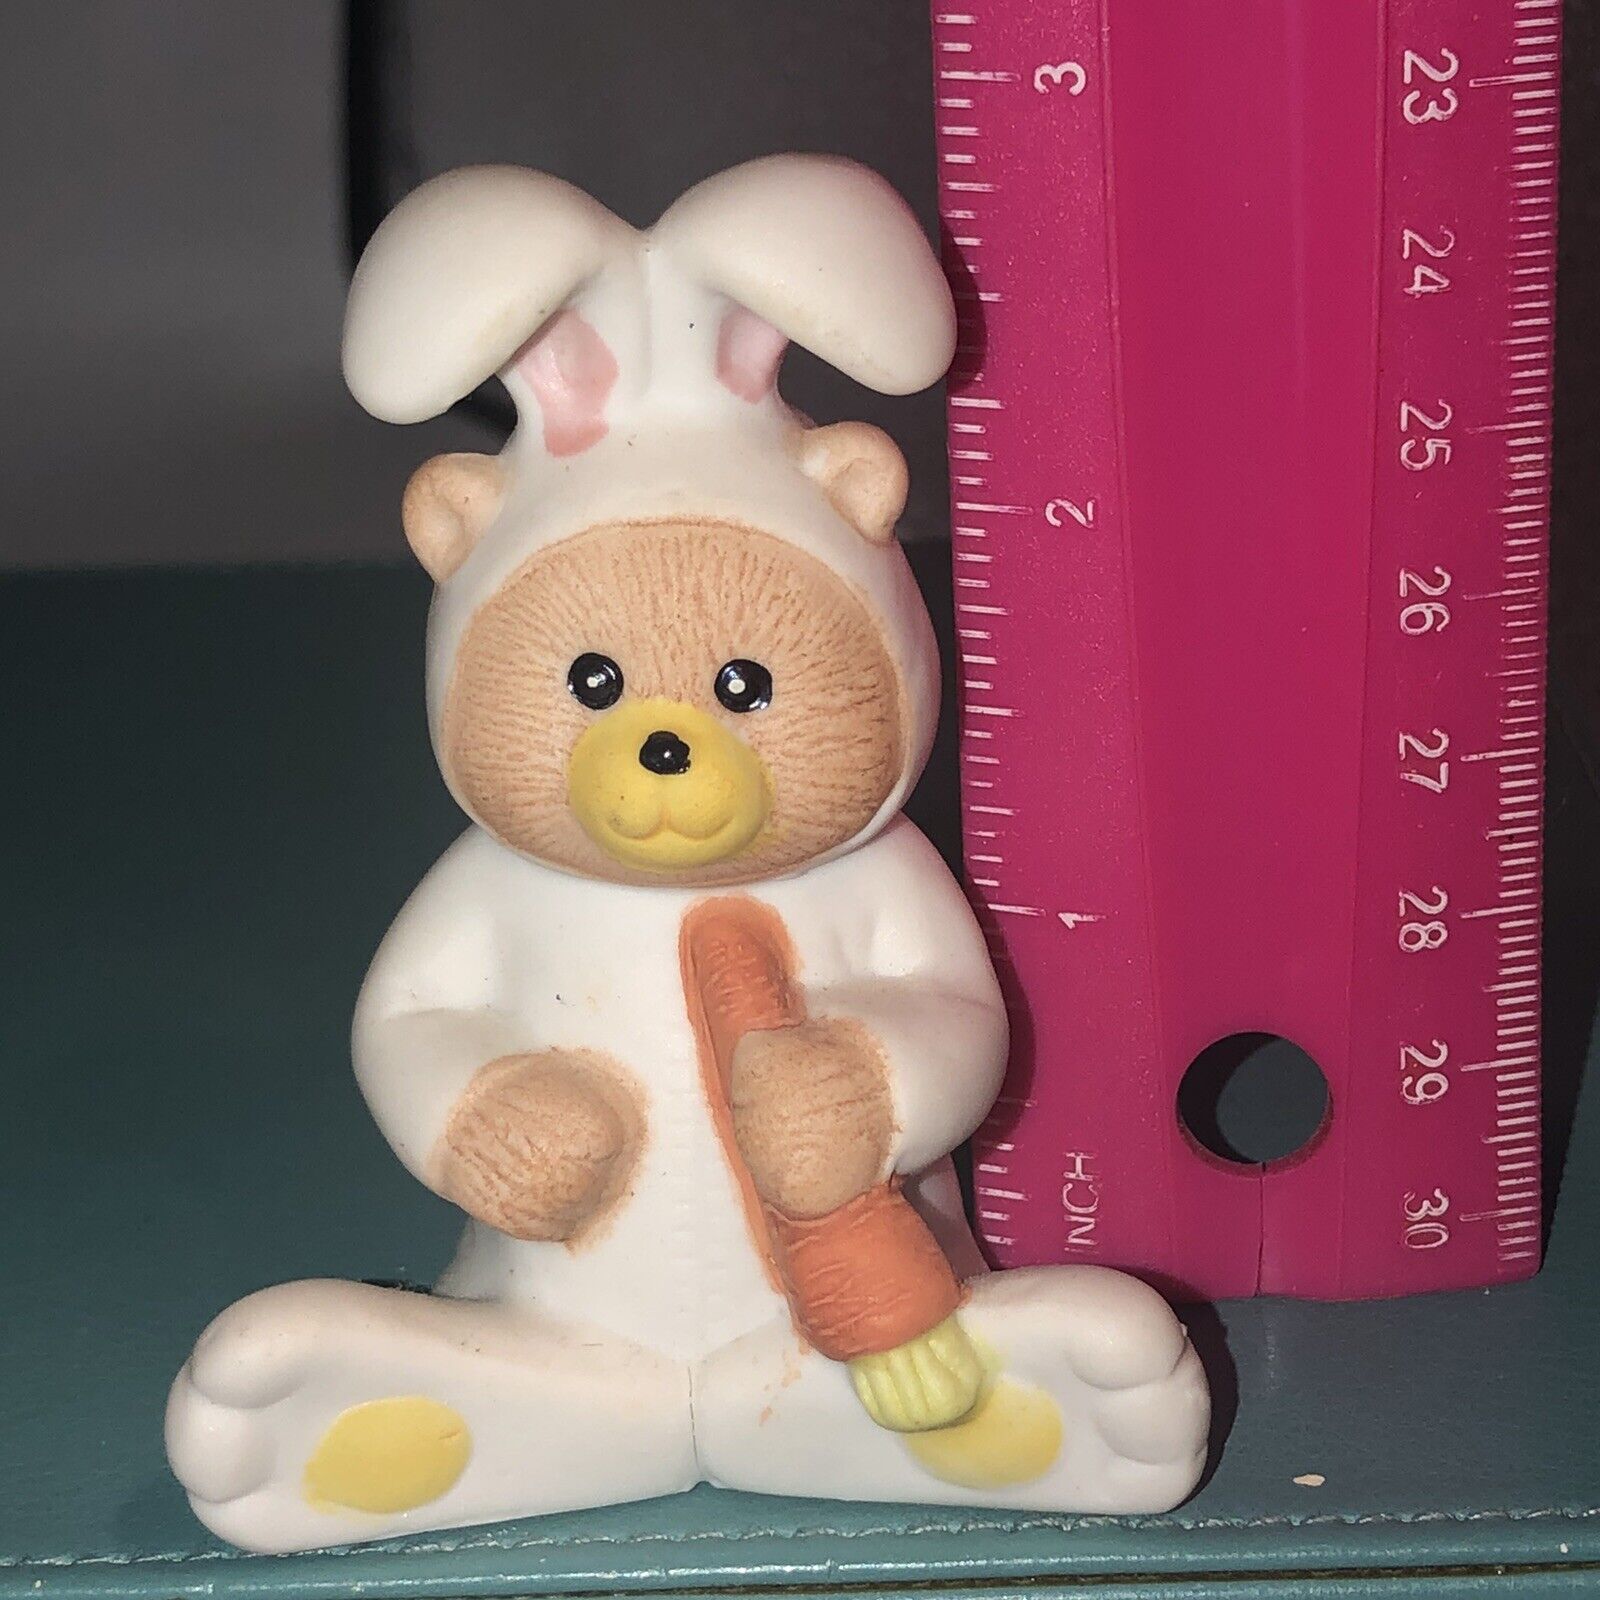 Vintage Teddy bear figurine dress like Easter bunny Figurine Fun